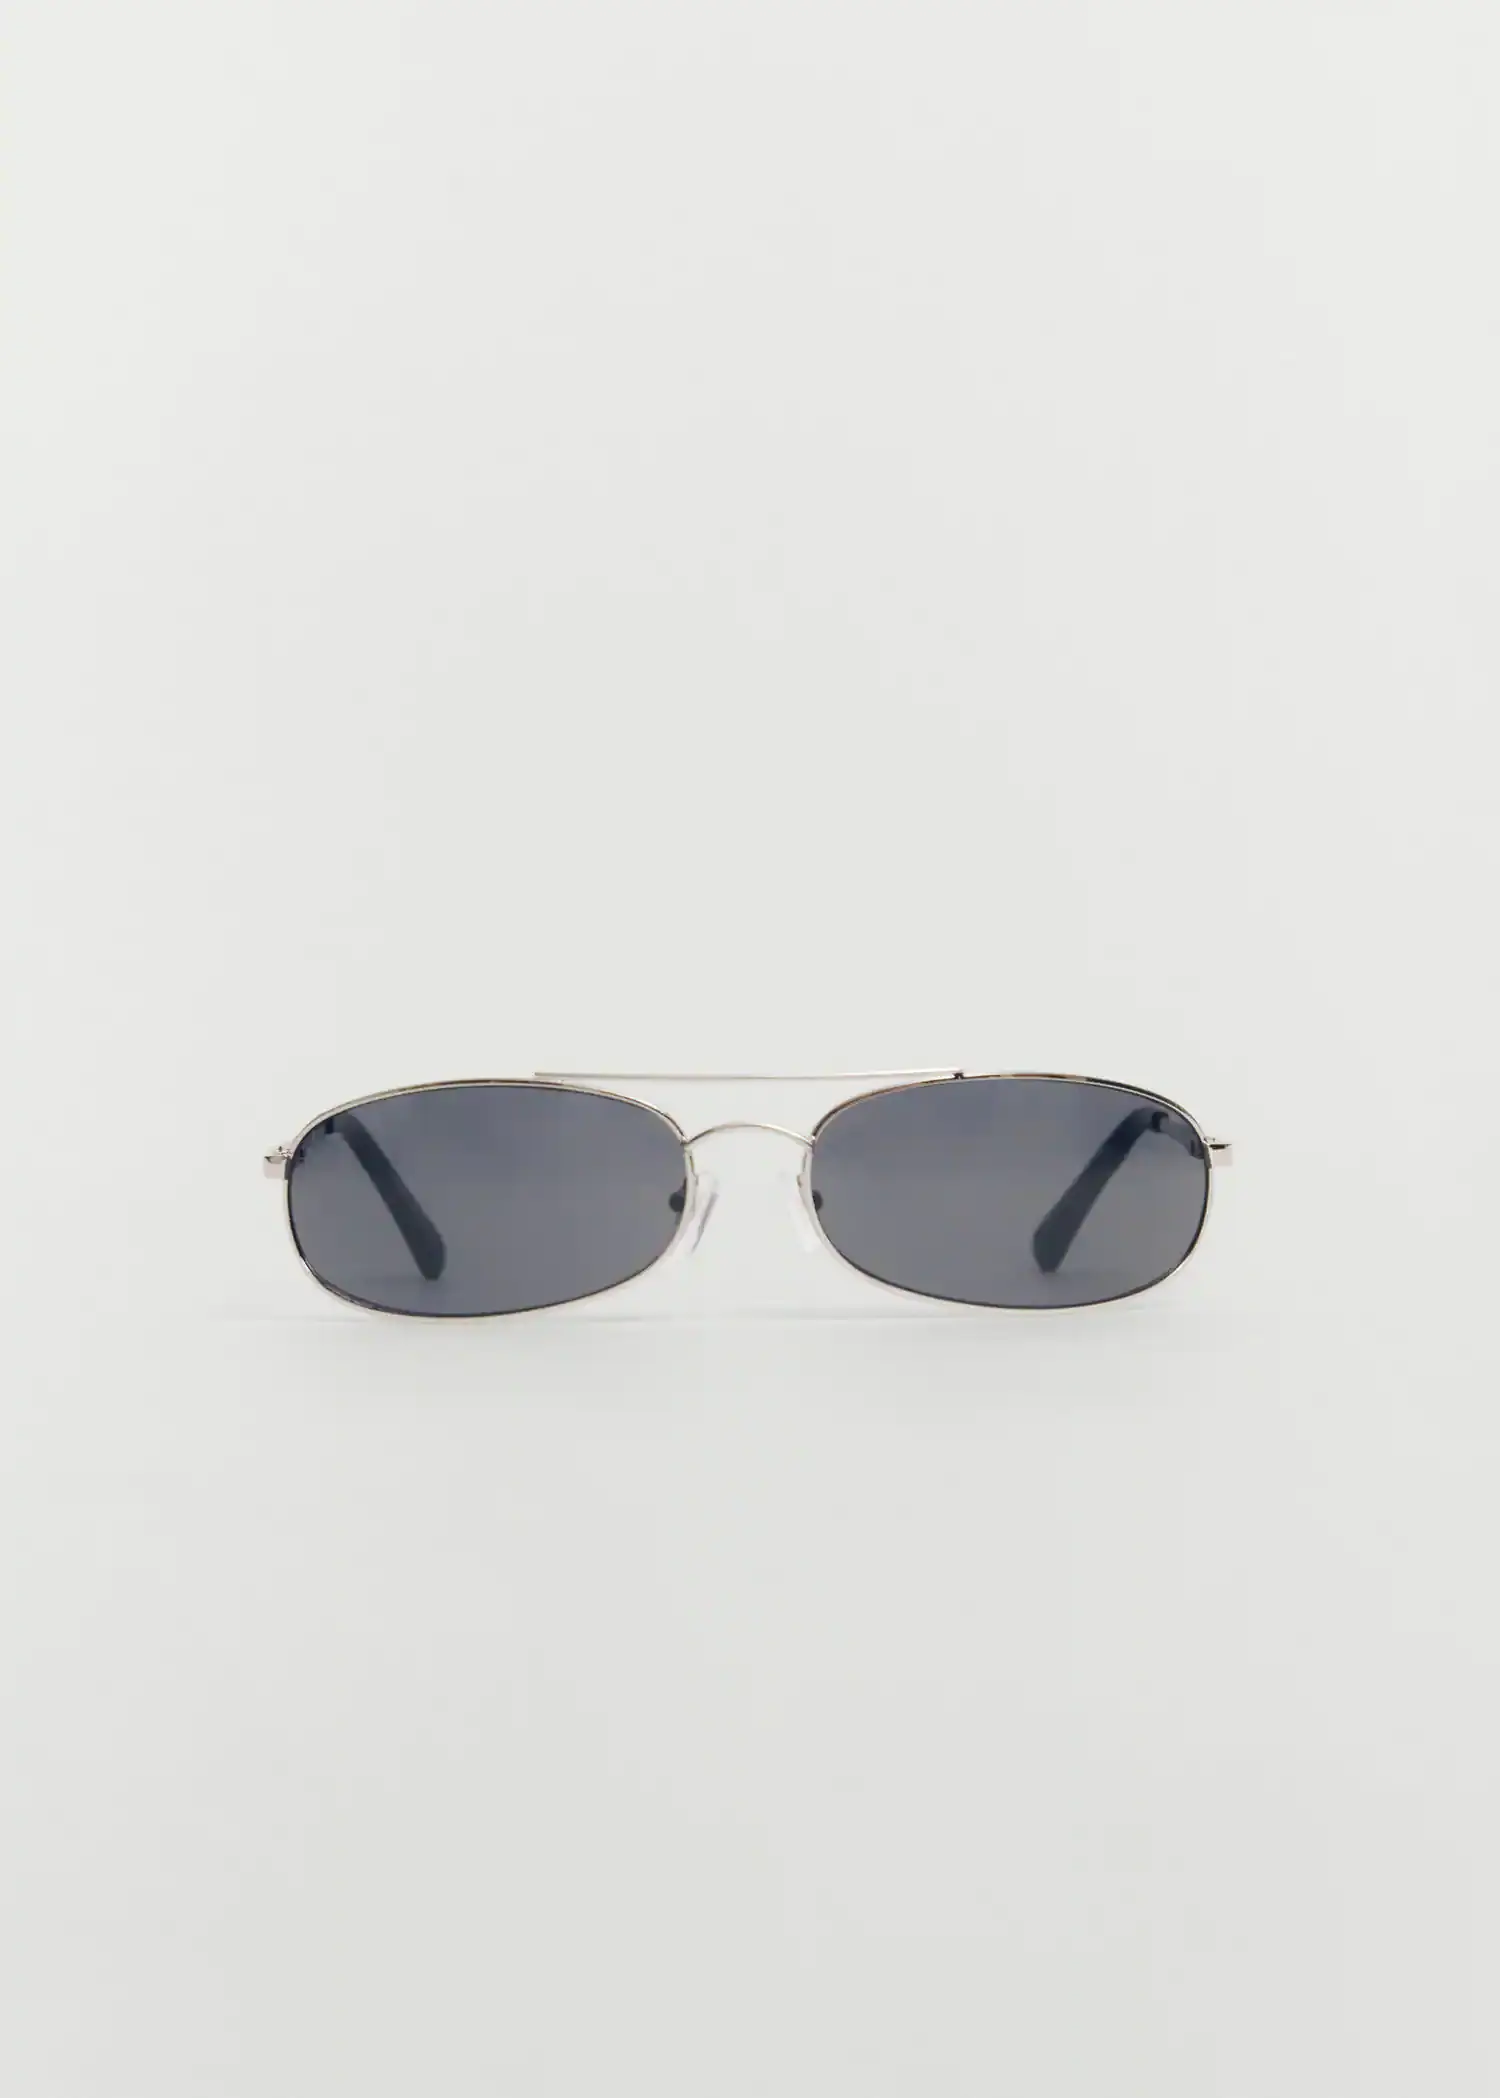 Mango Metallic frame sunglasses. 2